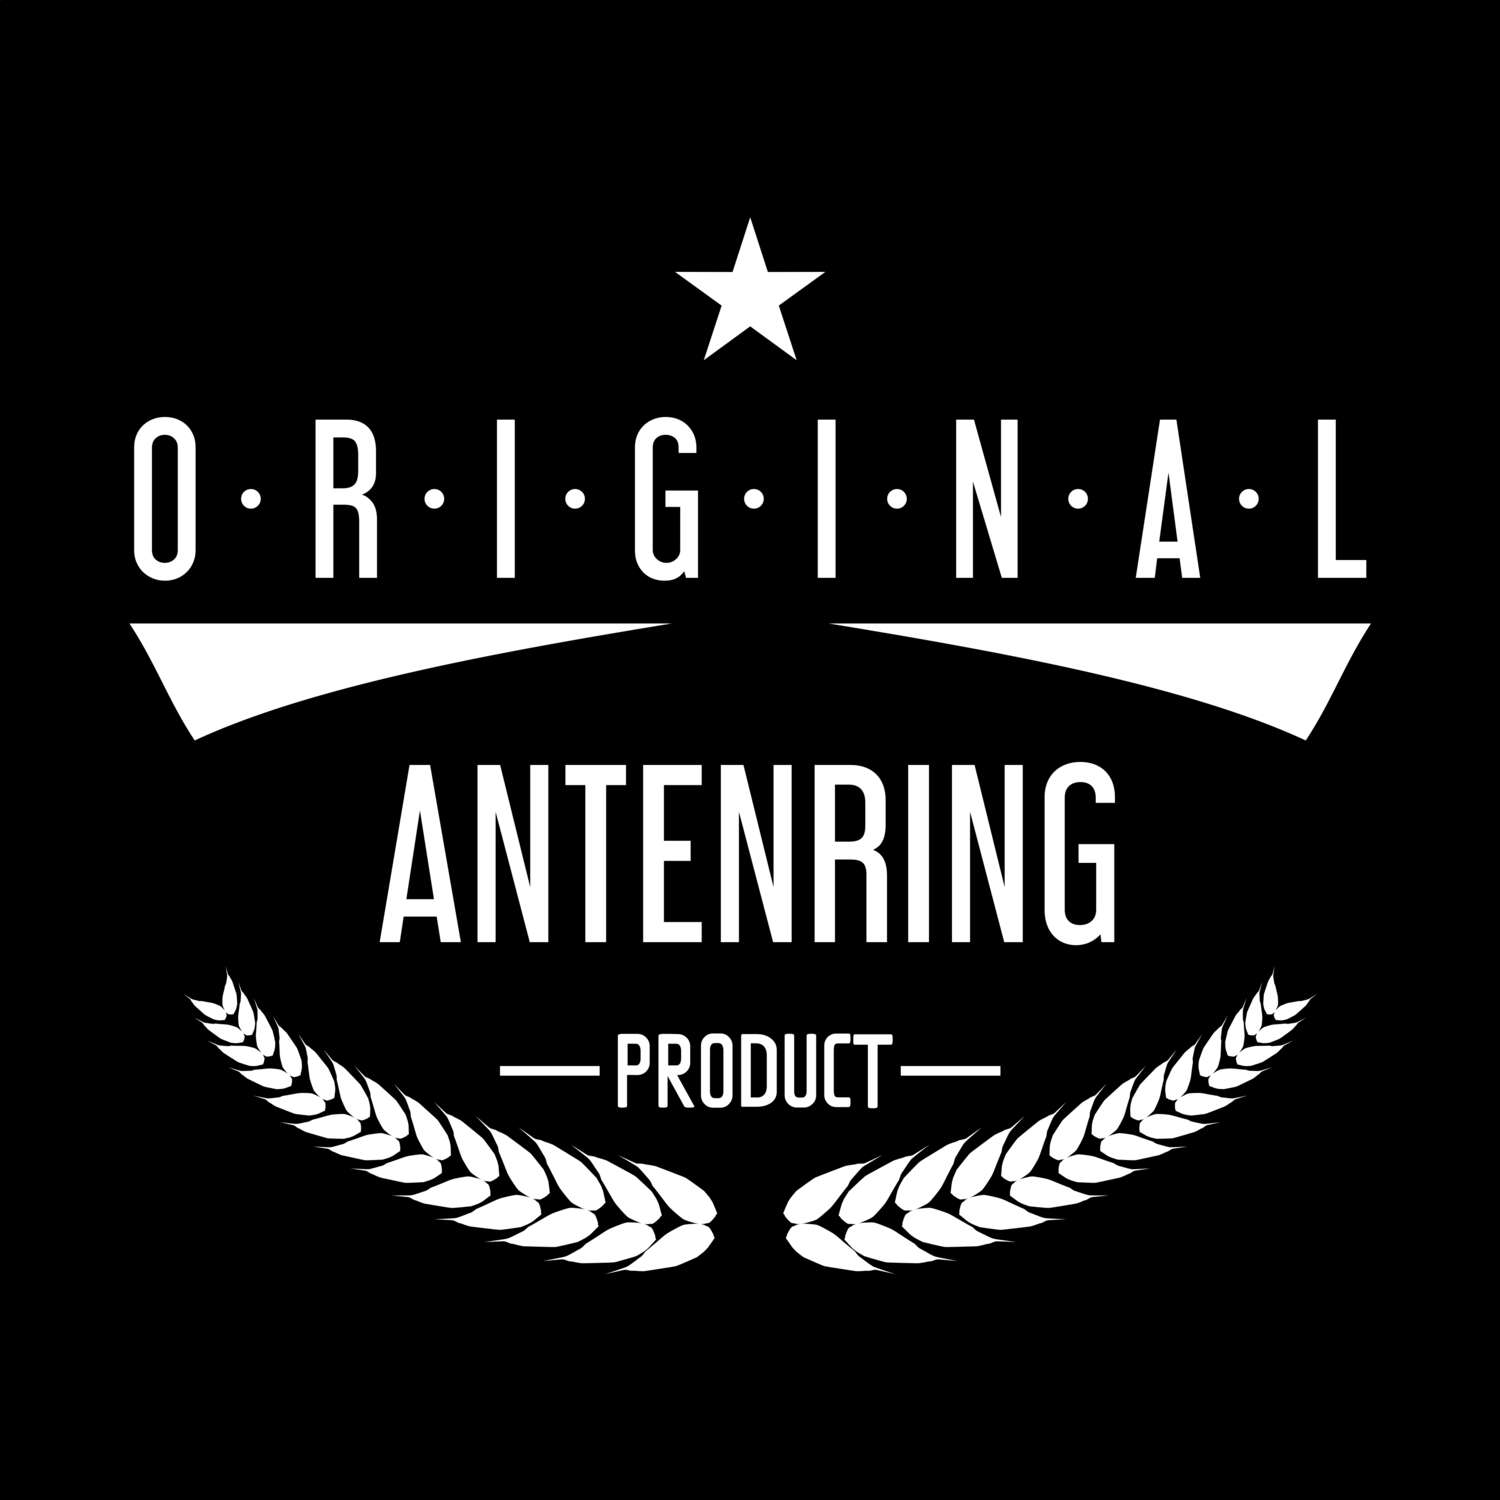 Antenring T-Shirt »Original Product«